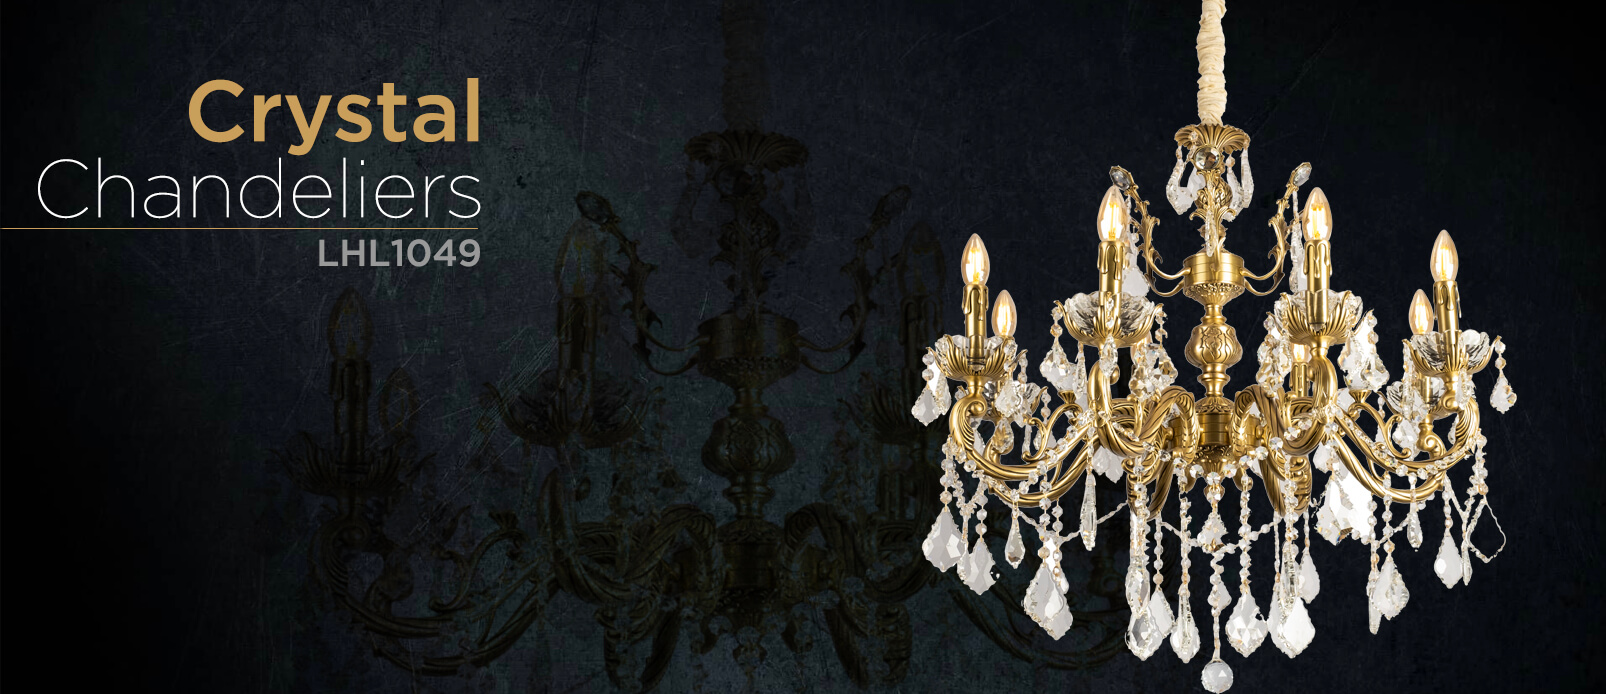 crystal chandeliers online sale